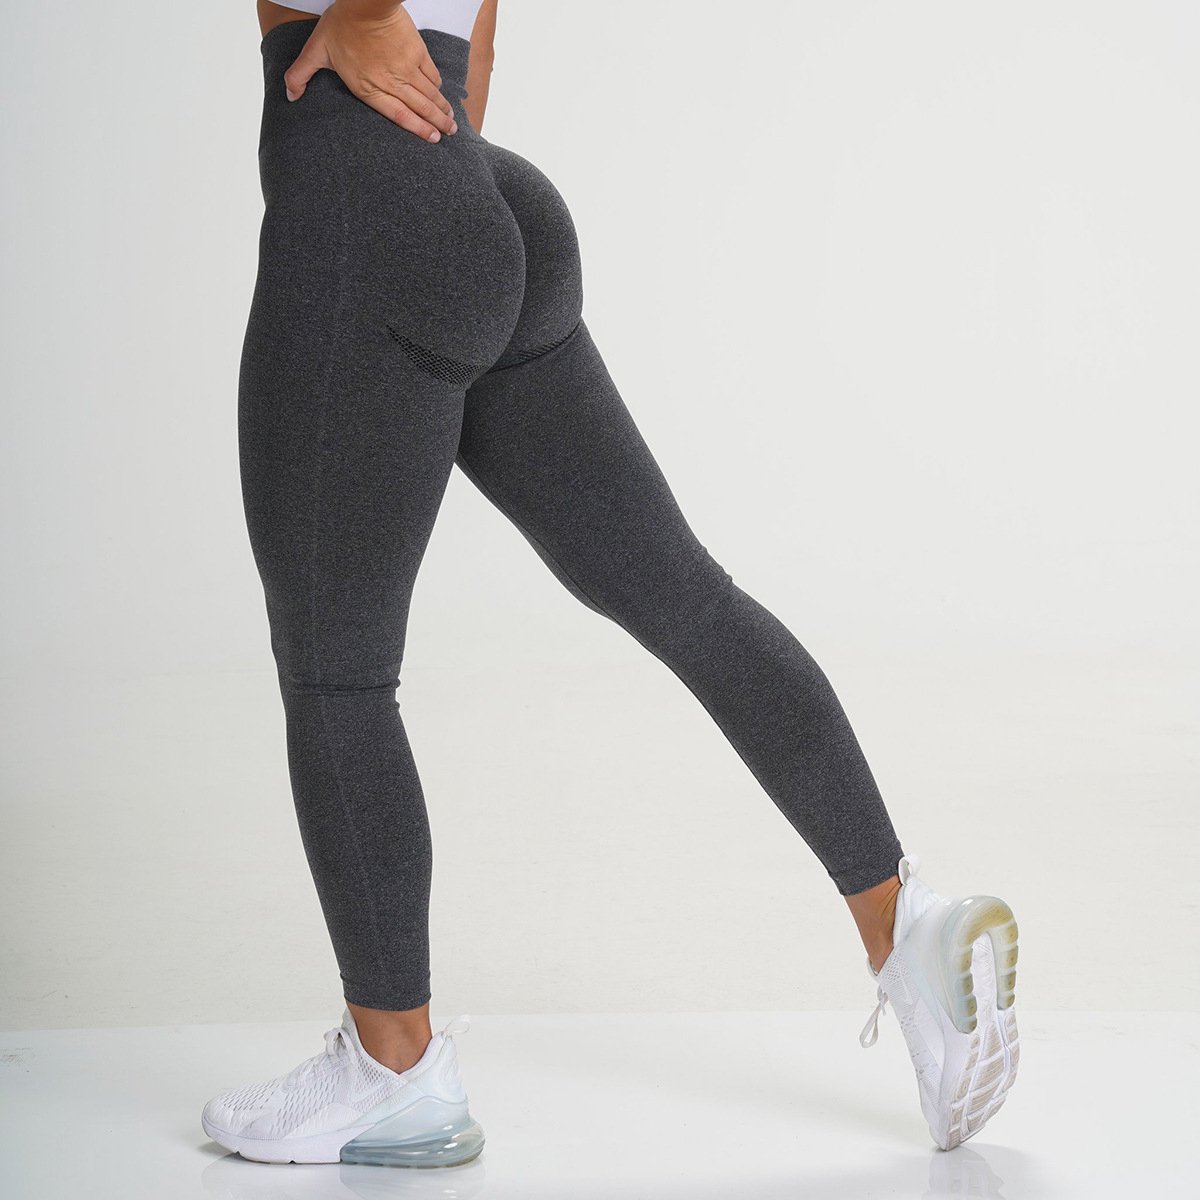 Wow Peach - Stretch Fitness & Yoga Legging - Butt-lift - Sportlegging - Work Out - Squat proof - High Waist - Comfort - Dark Grey - Size: X-Large